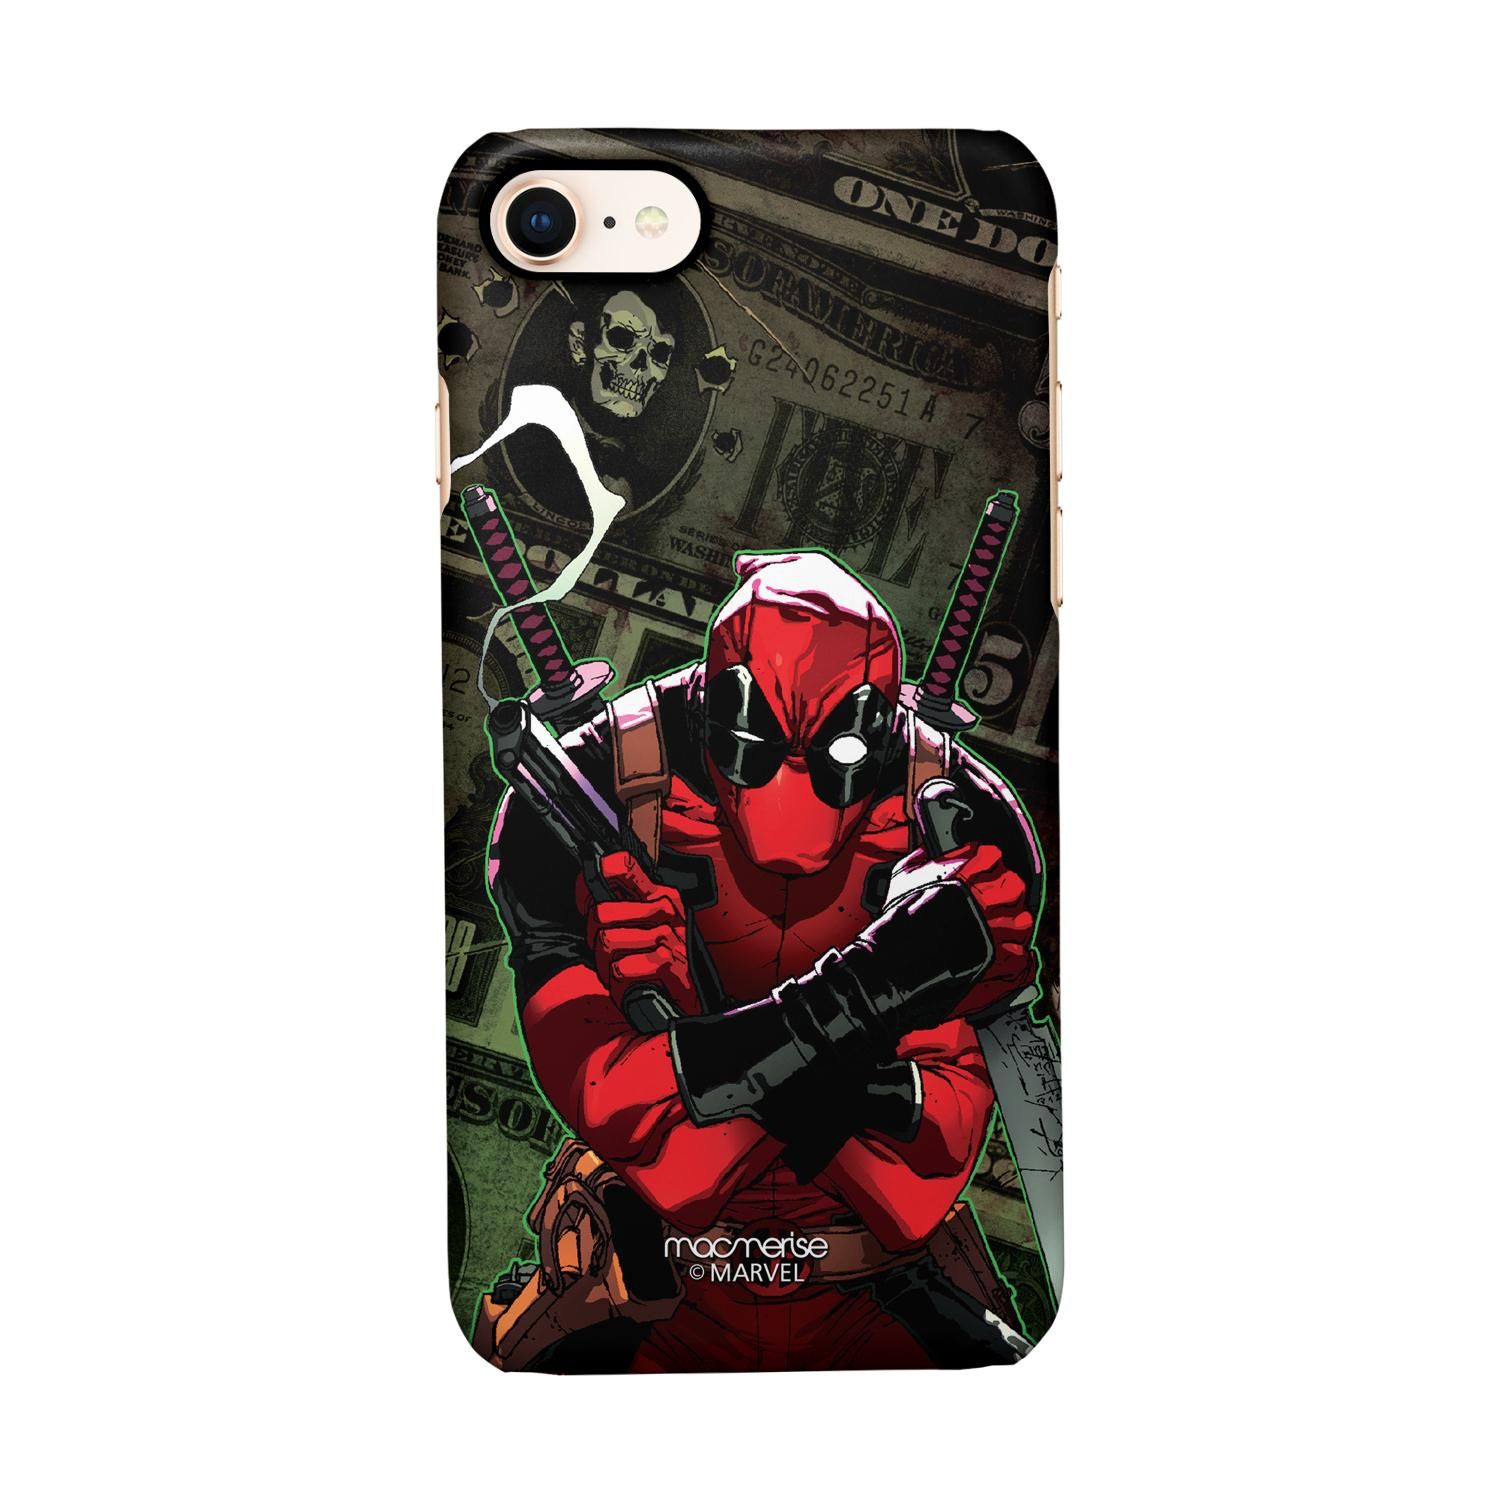 Buy Deadpool Dollar - Sleek Phone Case for iPhone 8 Online